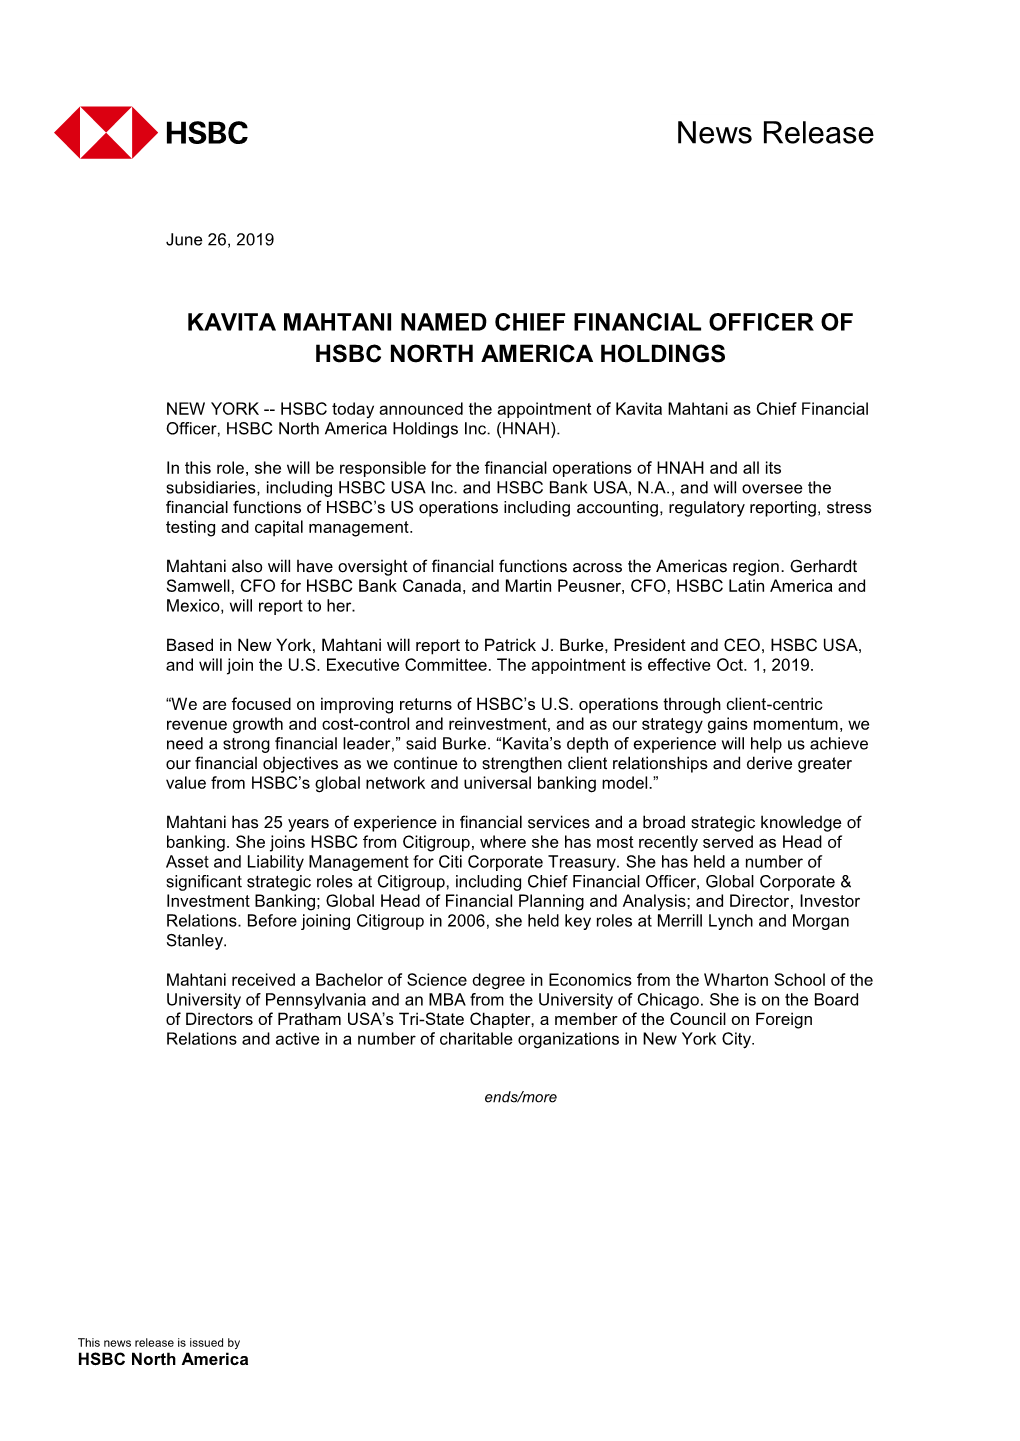 Kavita Mahtani Named Chief Financial Officer of Hsbc North America Holdings